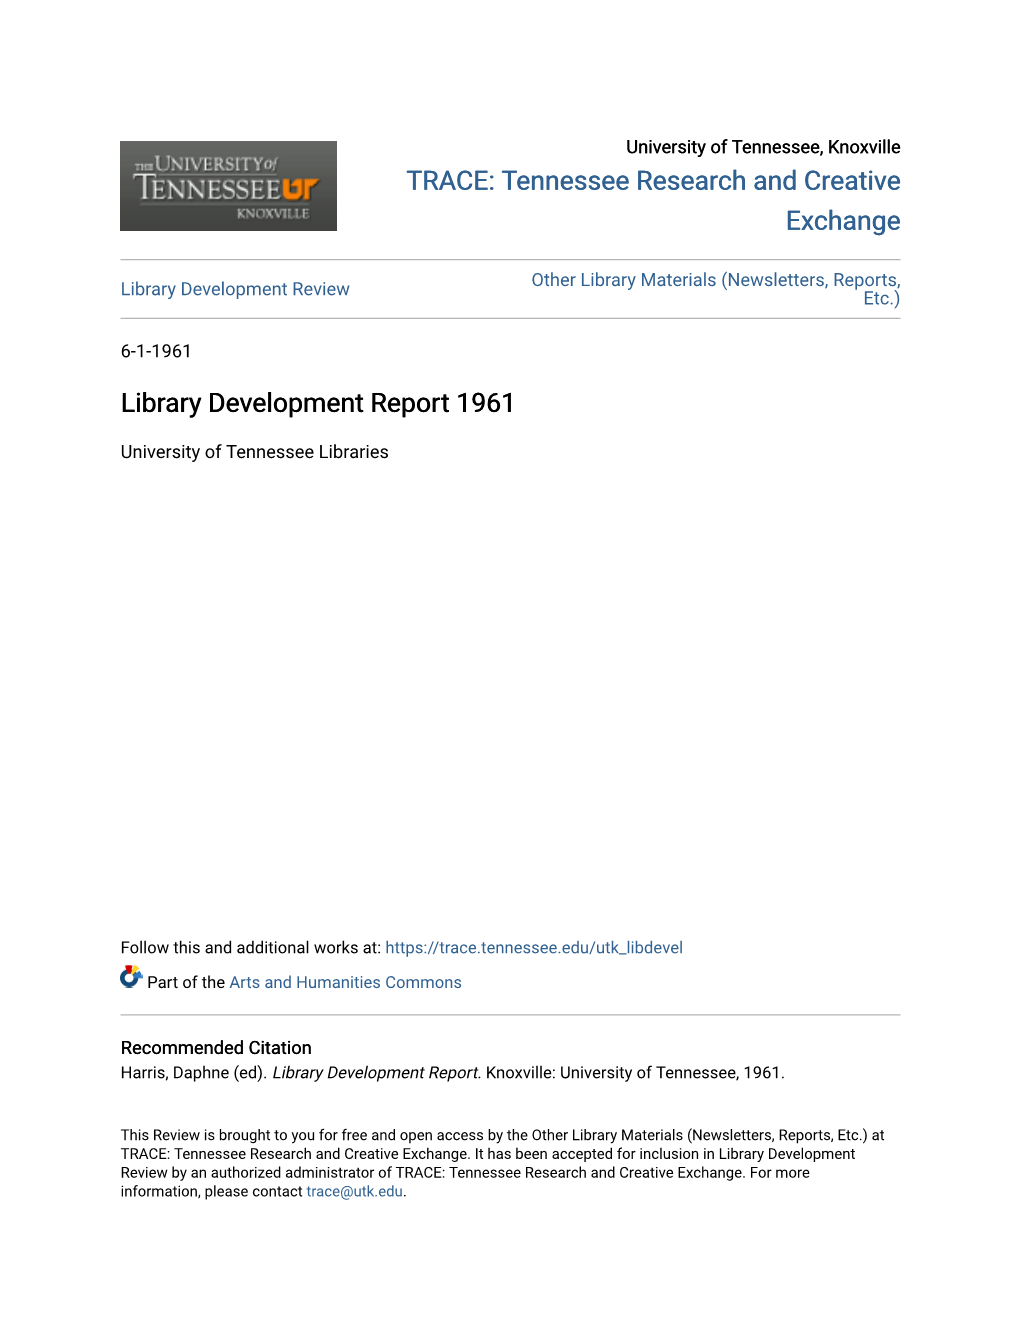 Library Development Report 1961